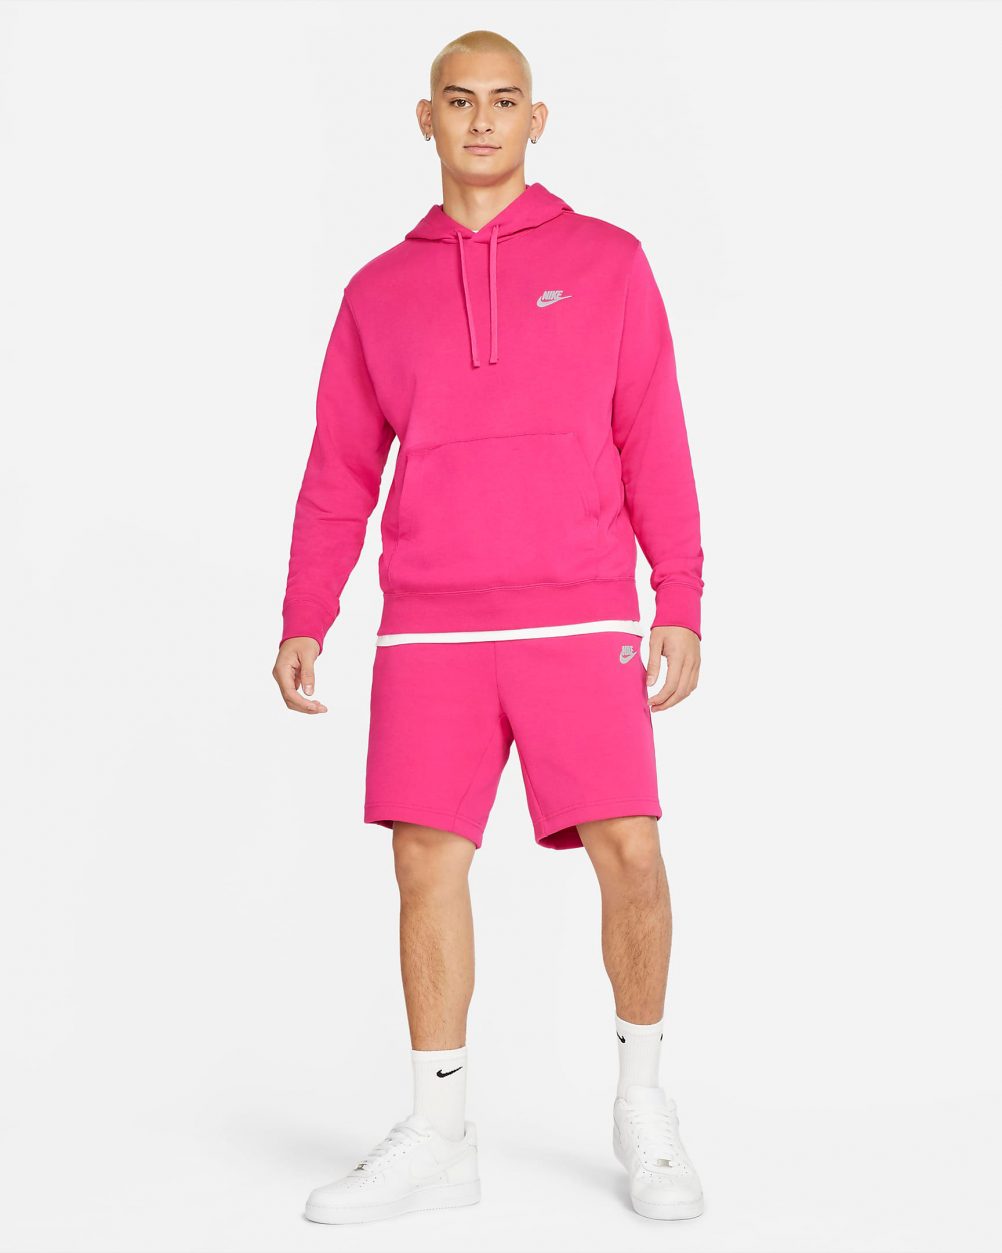 Nike Adapt Auto Max Fireberry Clothing Match | SneakerFits.com